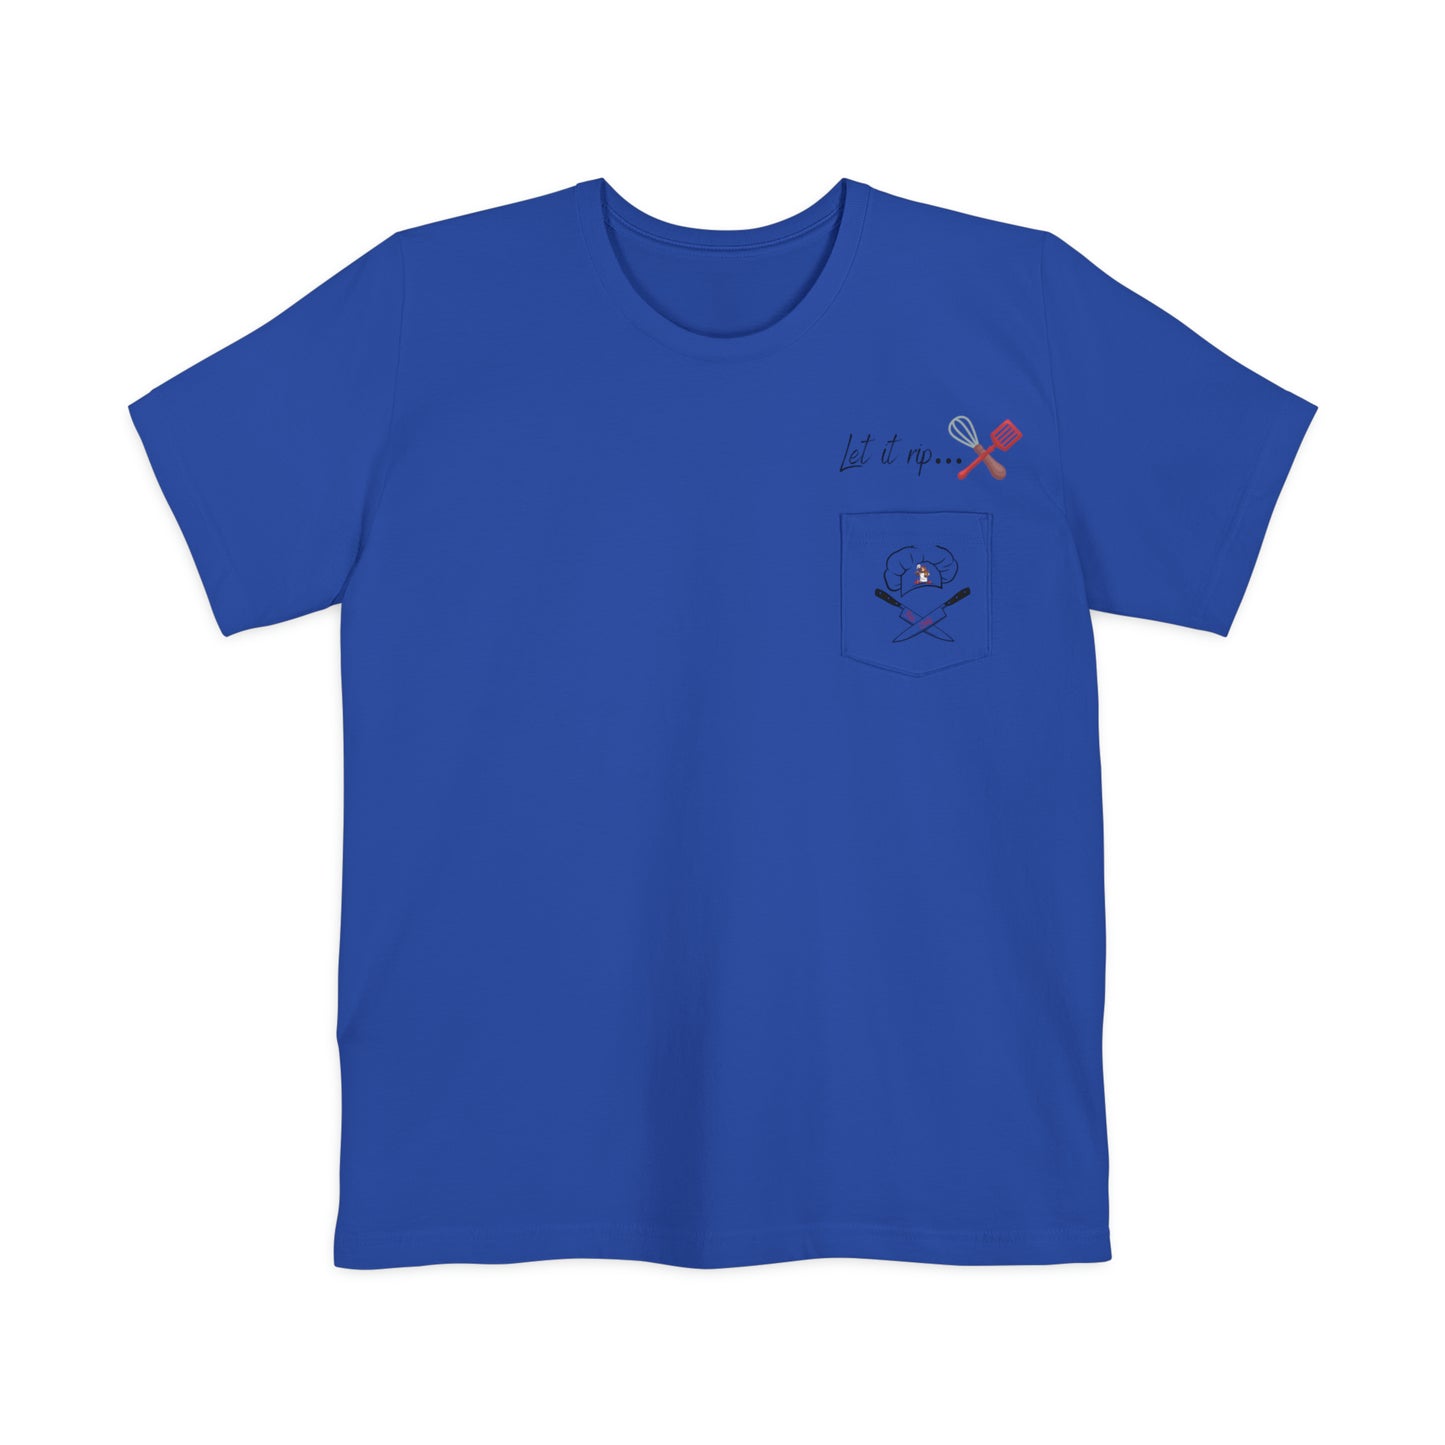 Bear Unisex Pocket T-shirt